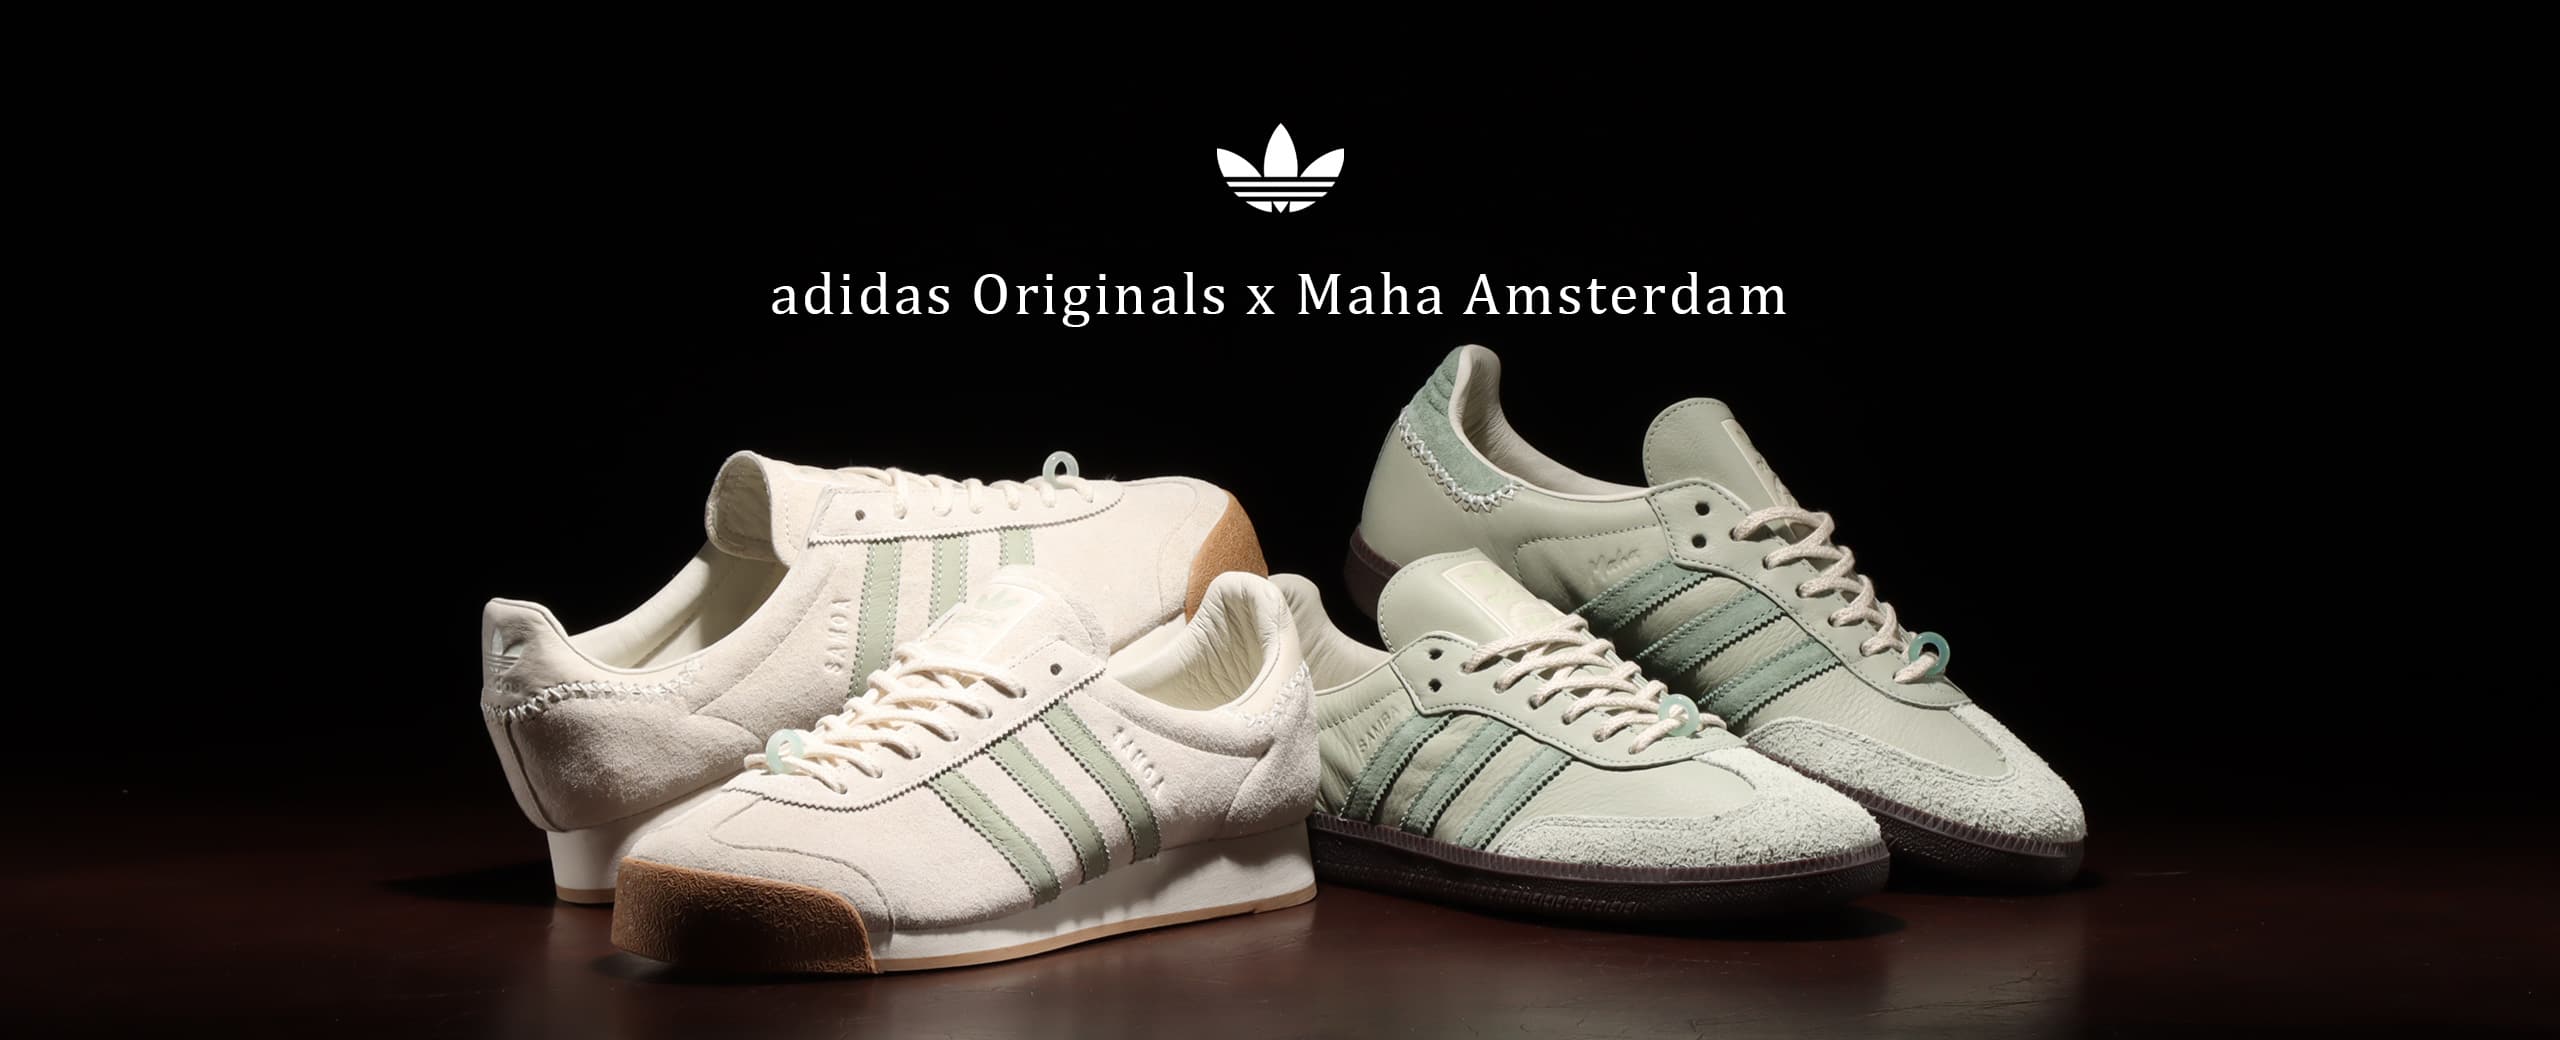 "adidas Originals x MAHA"